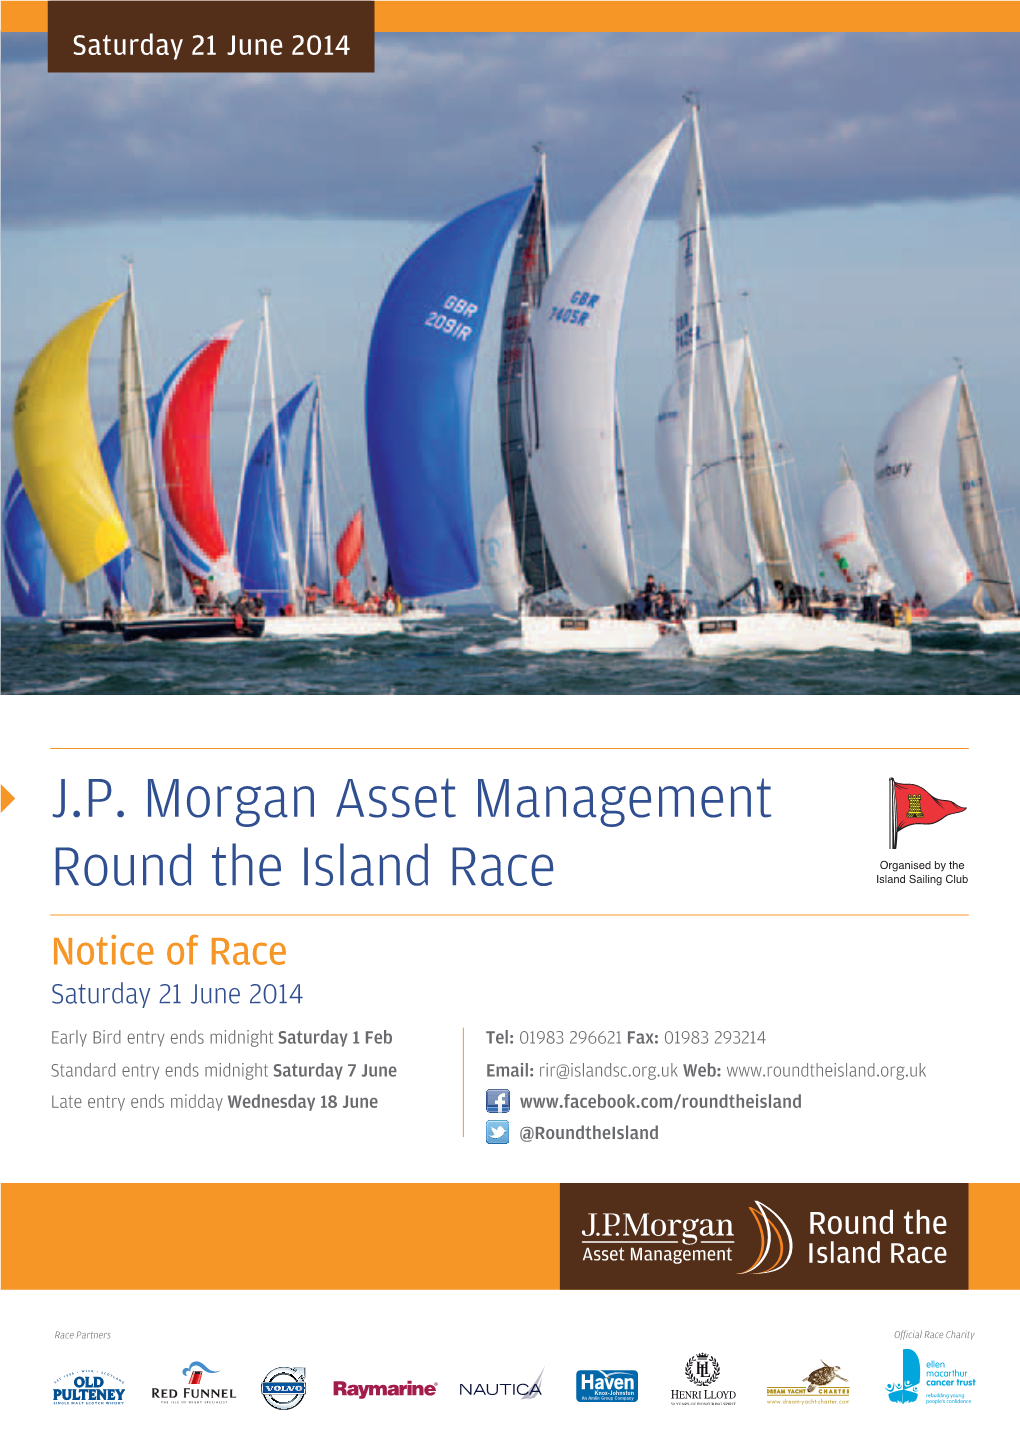 J.P. Morgan Asset Management Round the Island Race